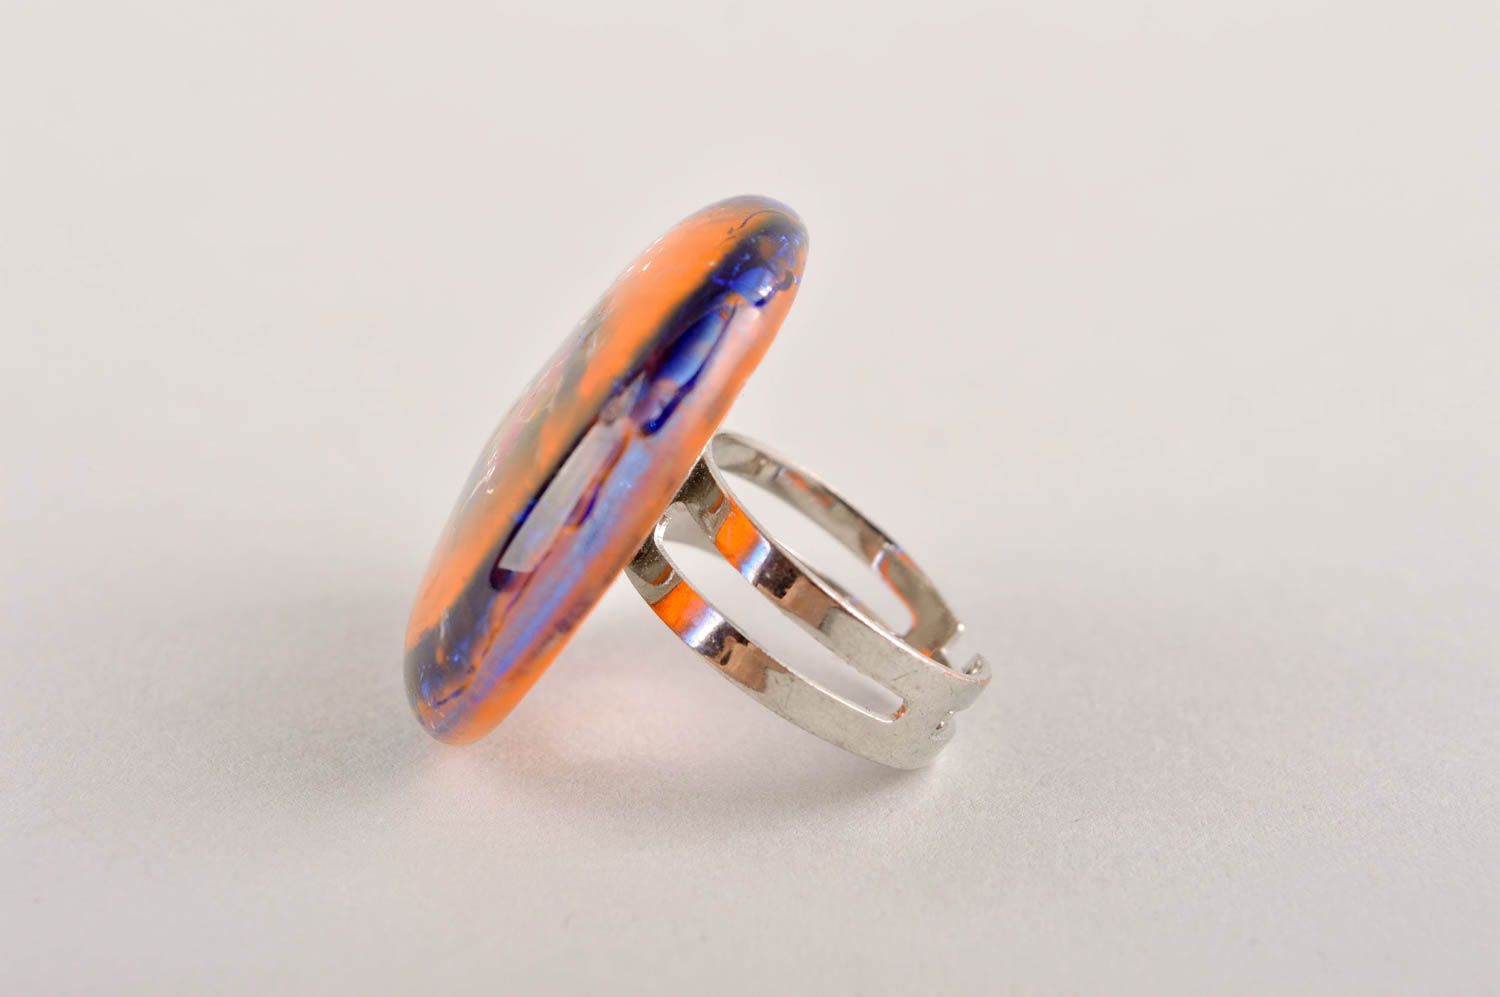 Handmade glass ring designer ring unusual jewelry glass accessory gift ideas photo 3